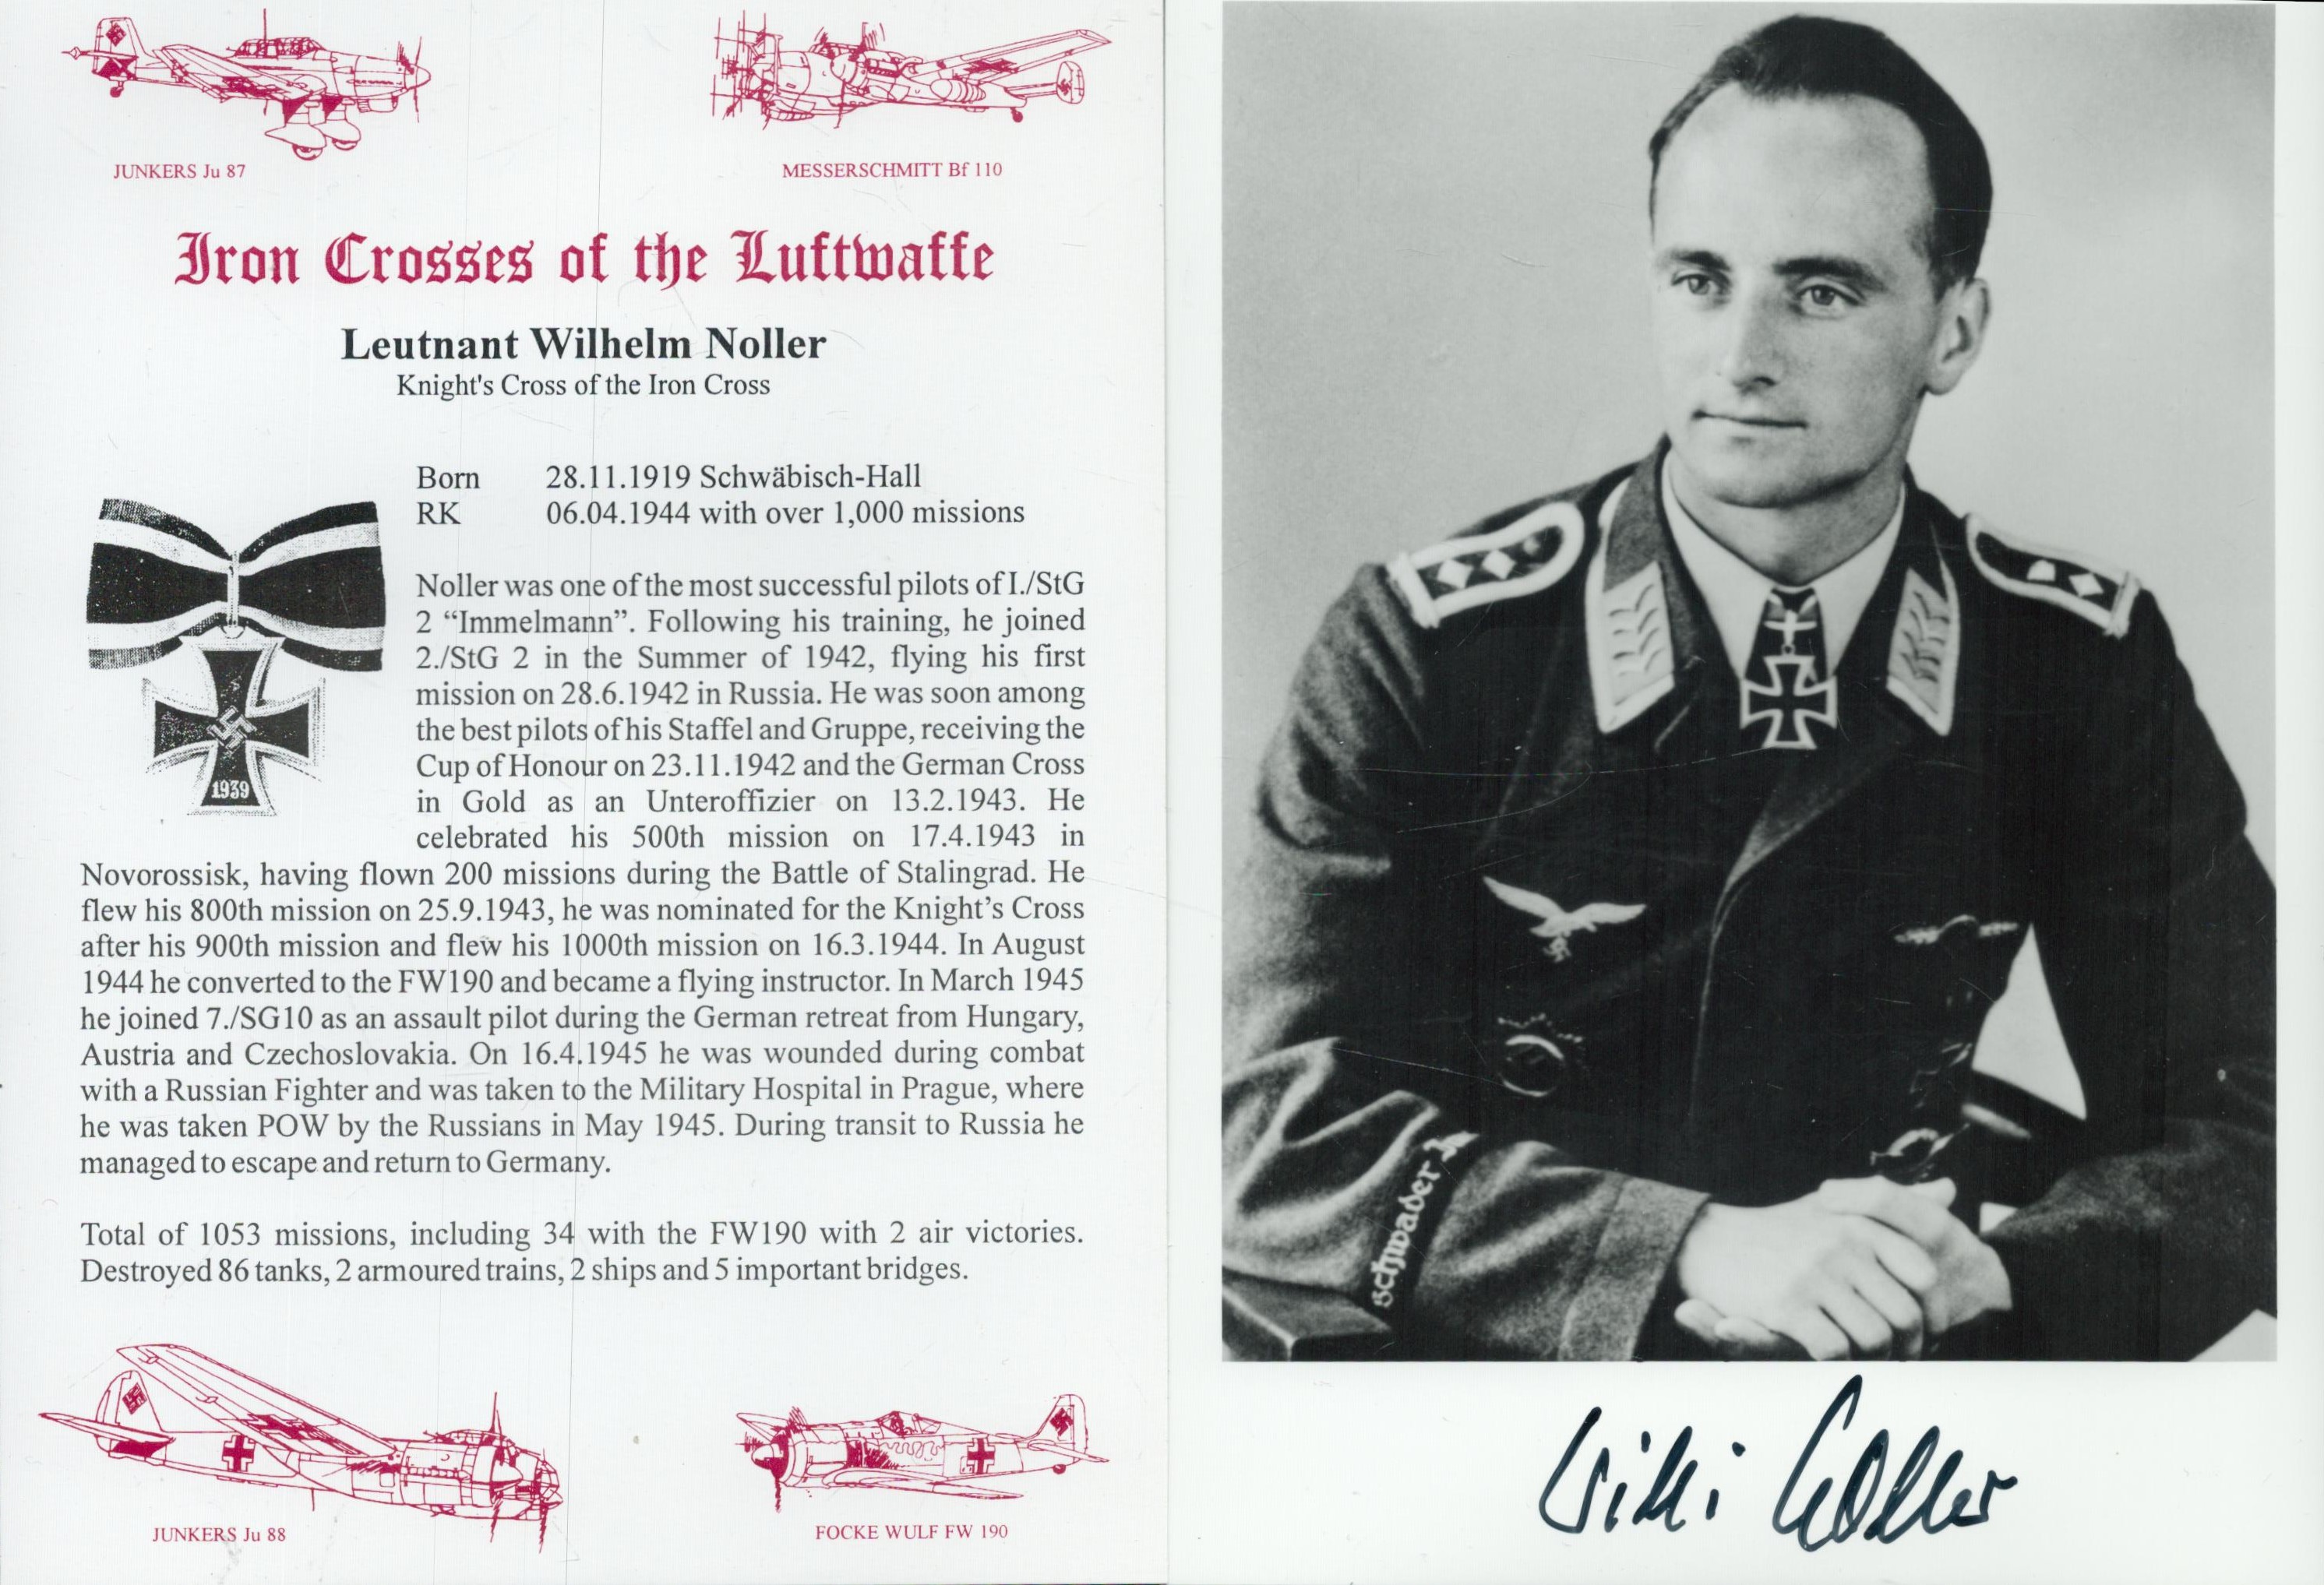 WW2 Luftwaffe fighter ace Leut Wilhelm Noller KC signed 7 x 5 inch b/w portrait photo along with a